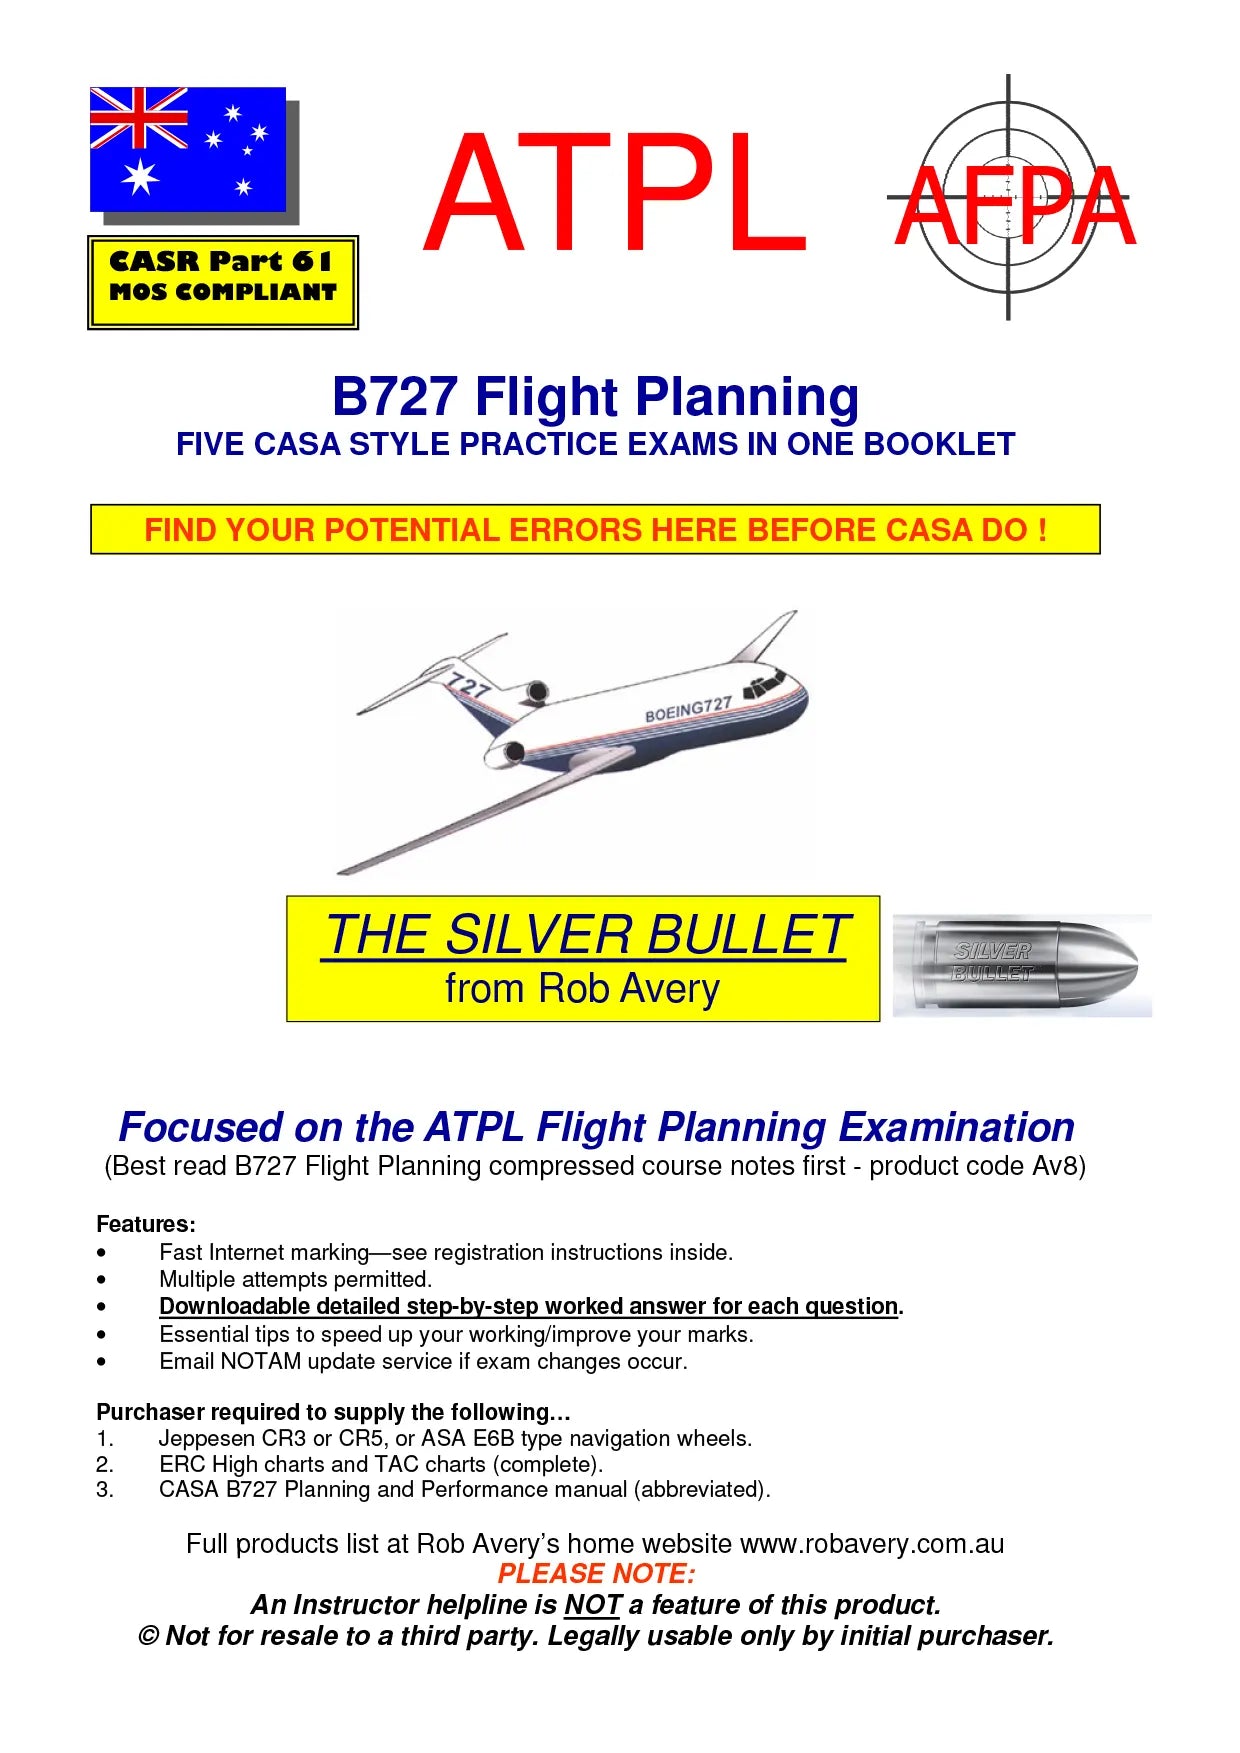 ATPL Flight Planning Book of 5 X Exams B727